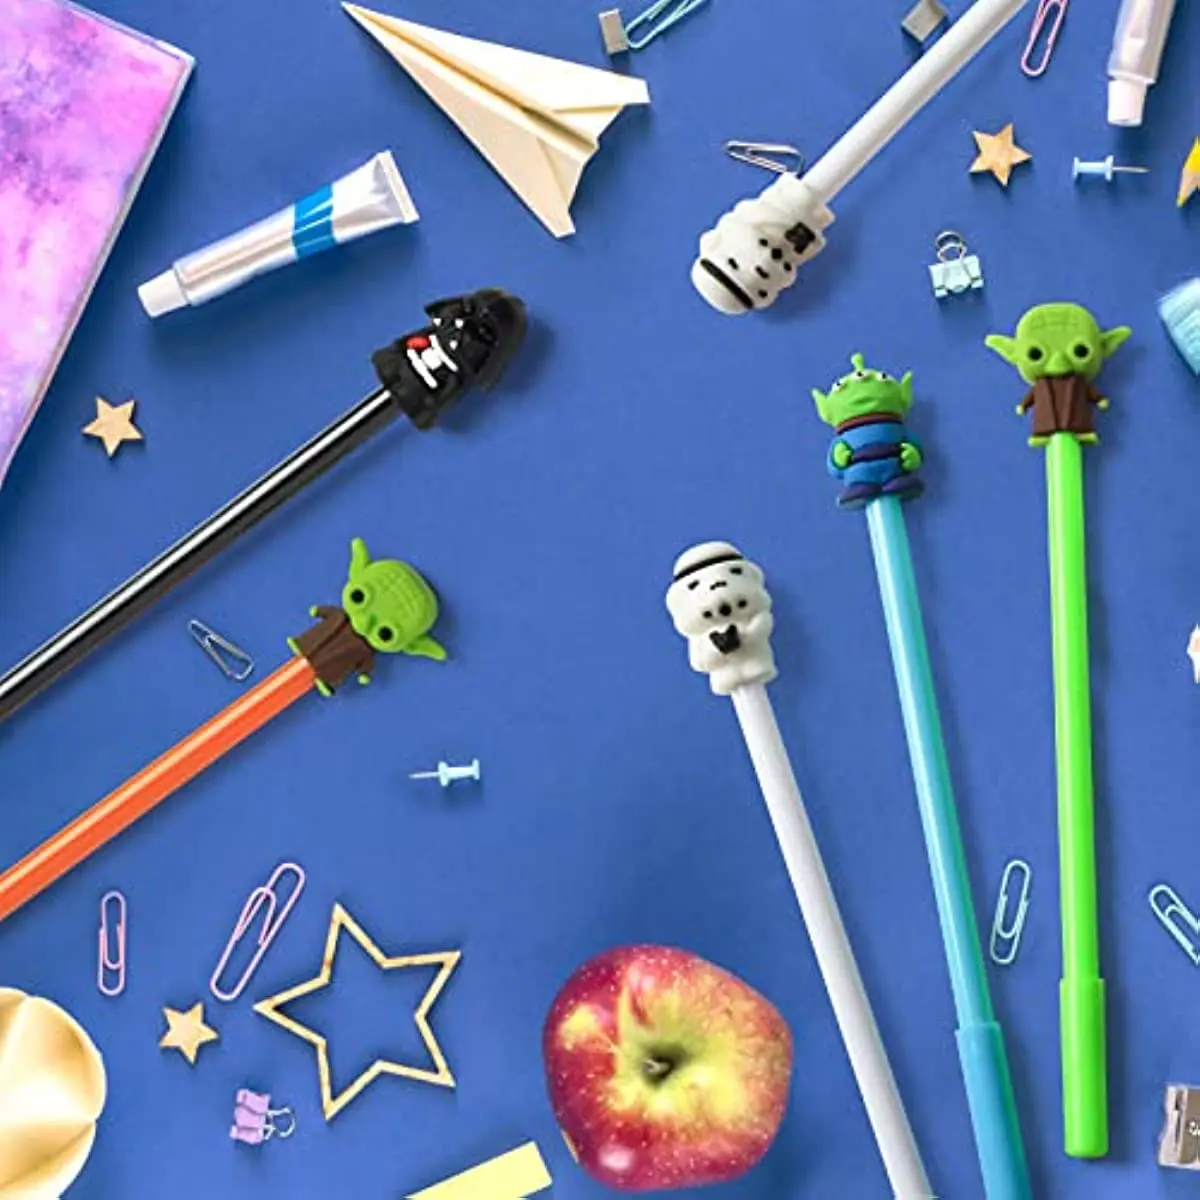 24 PCs Gel Pens Set Black Ink Pens Cute Kawaii Gifts for Kids Decorations School Office Supplies Office Accessories